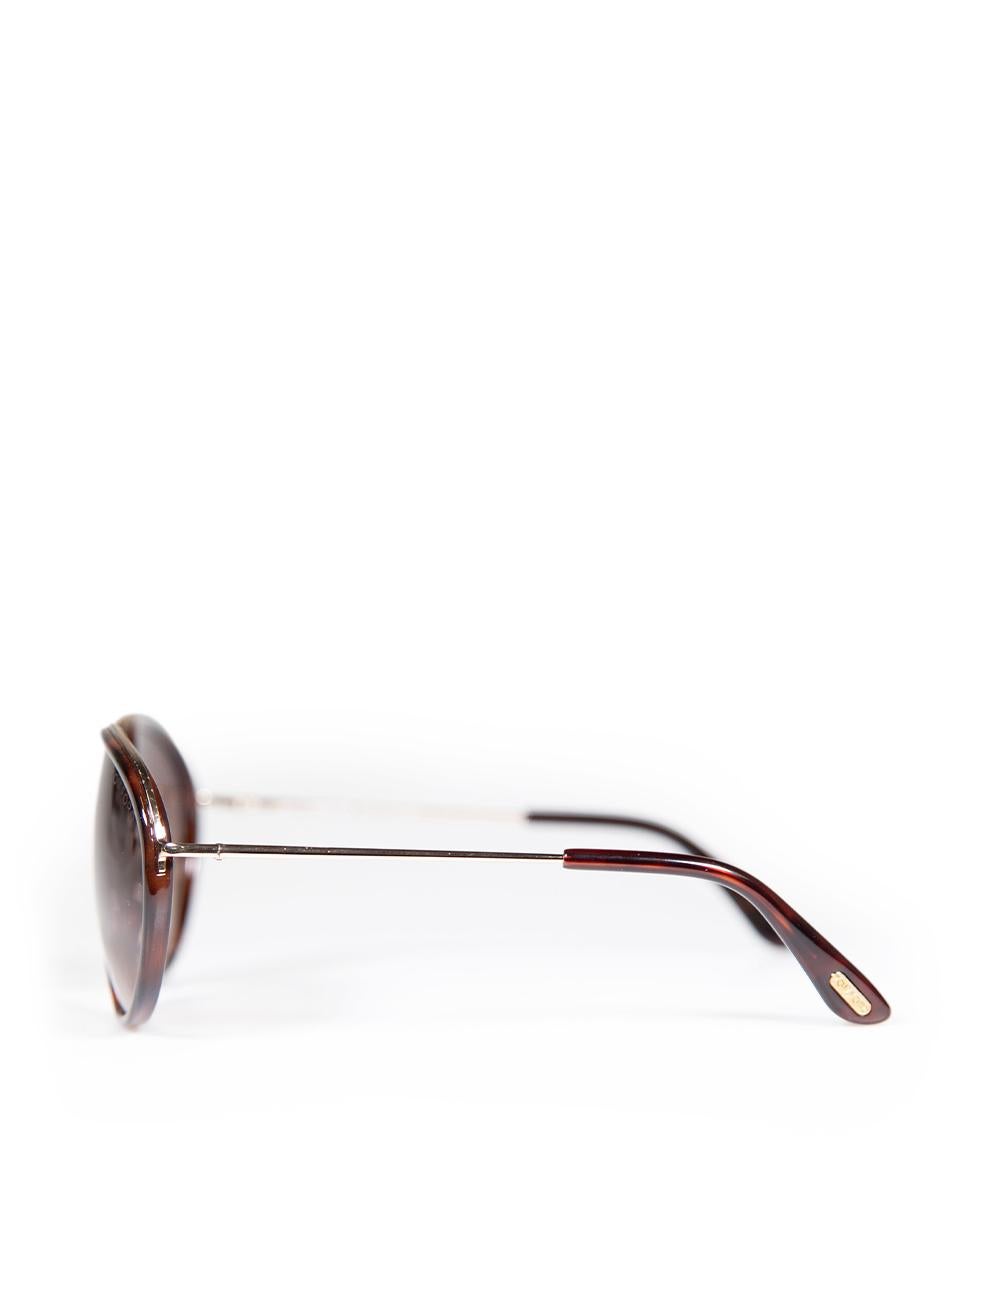 Tom Ford Dark Havana Gradient Sunglasses For Sale 1